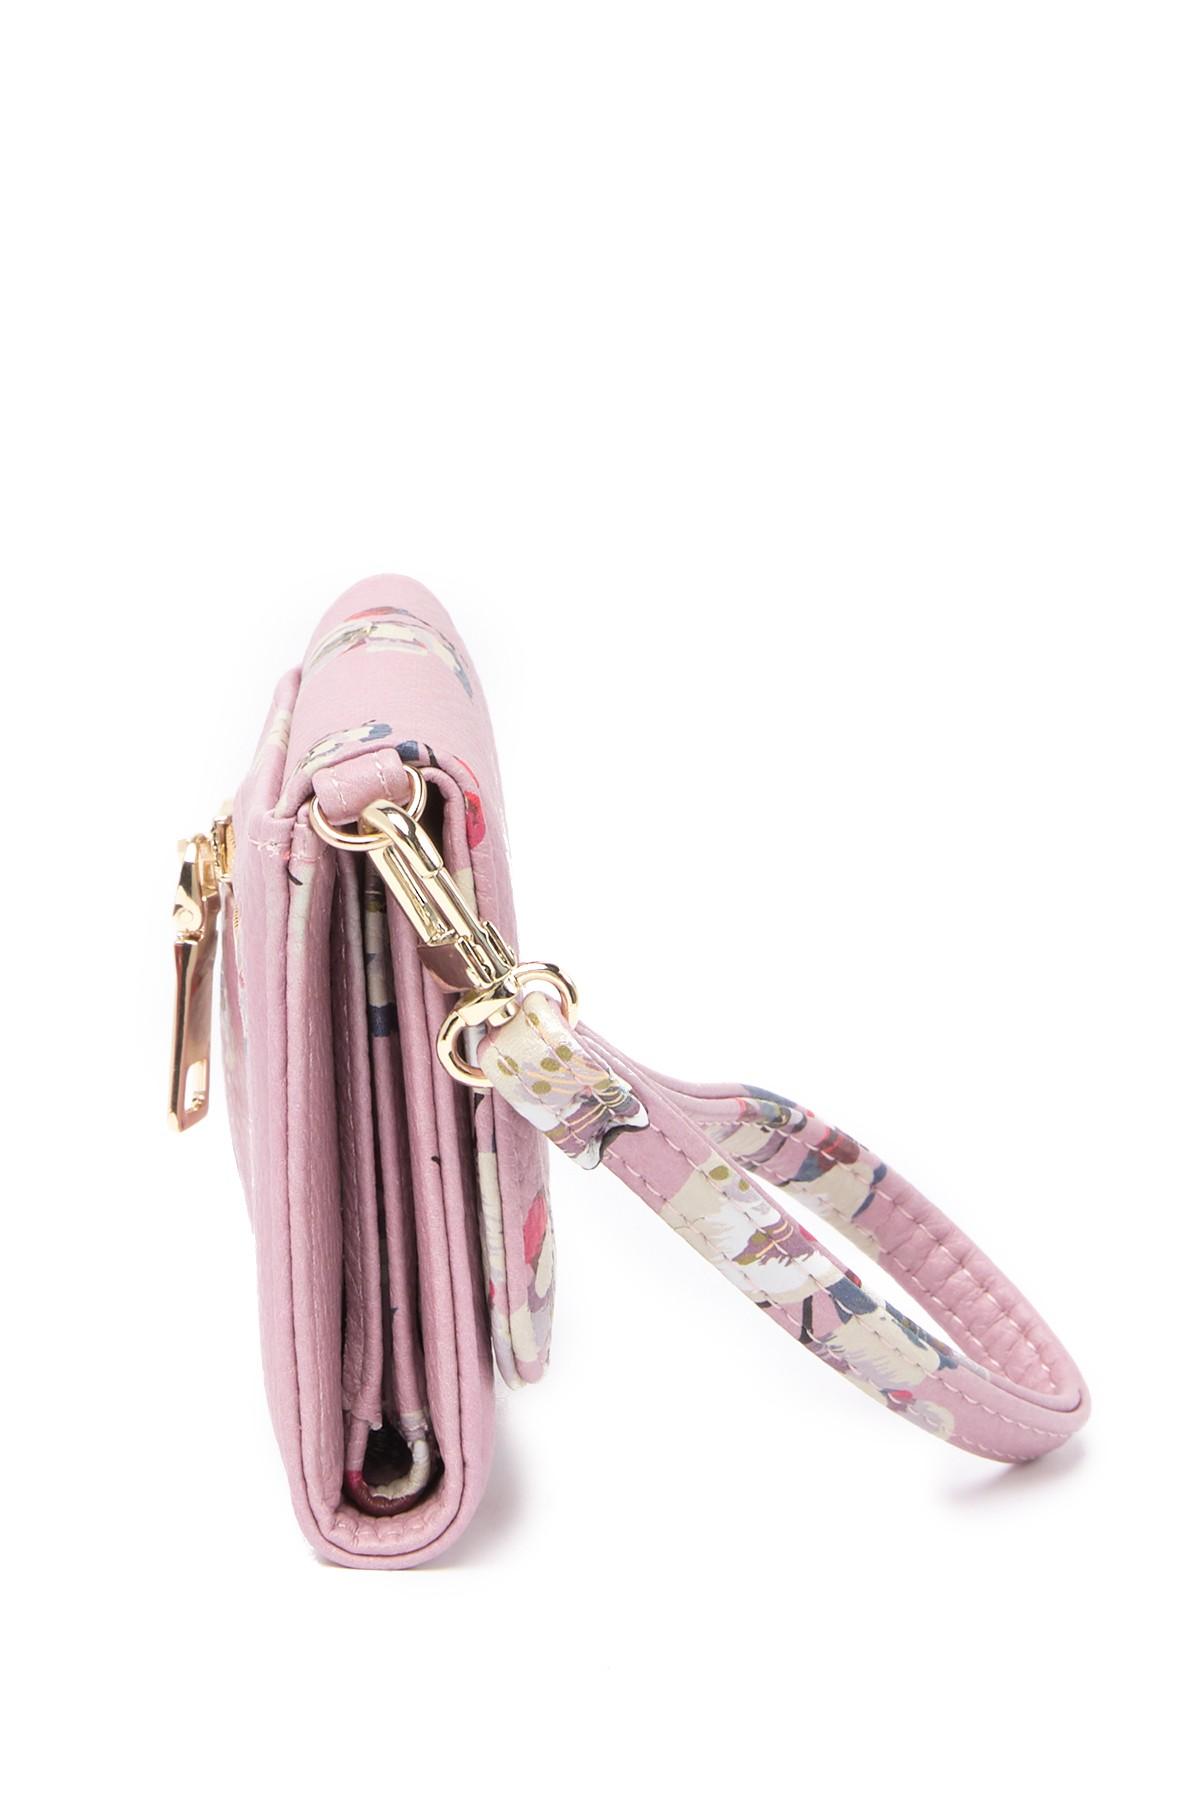 Steve Madden French Wristlet Wallet in Pink | Lyst